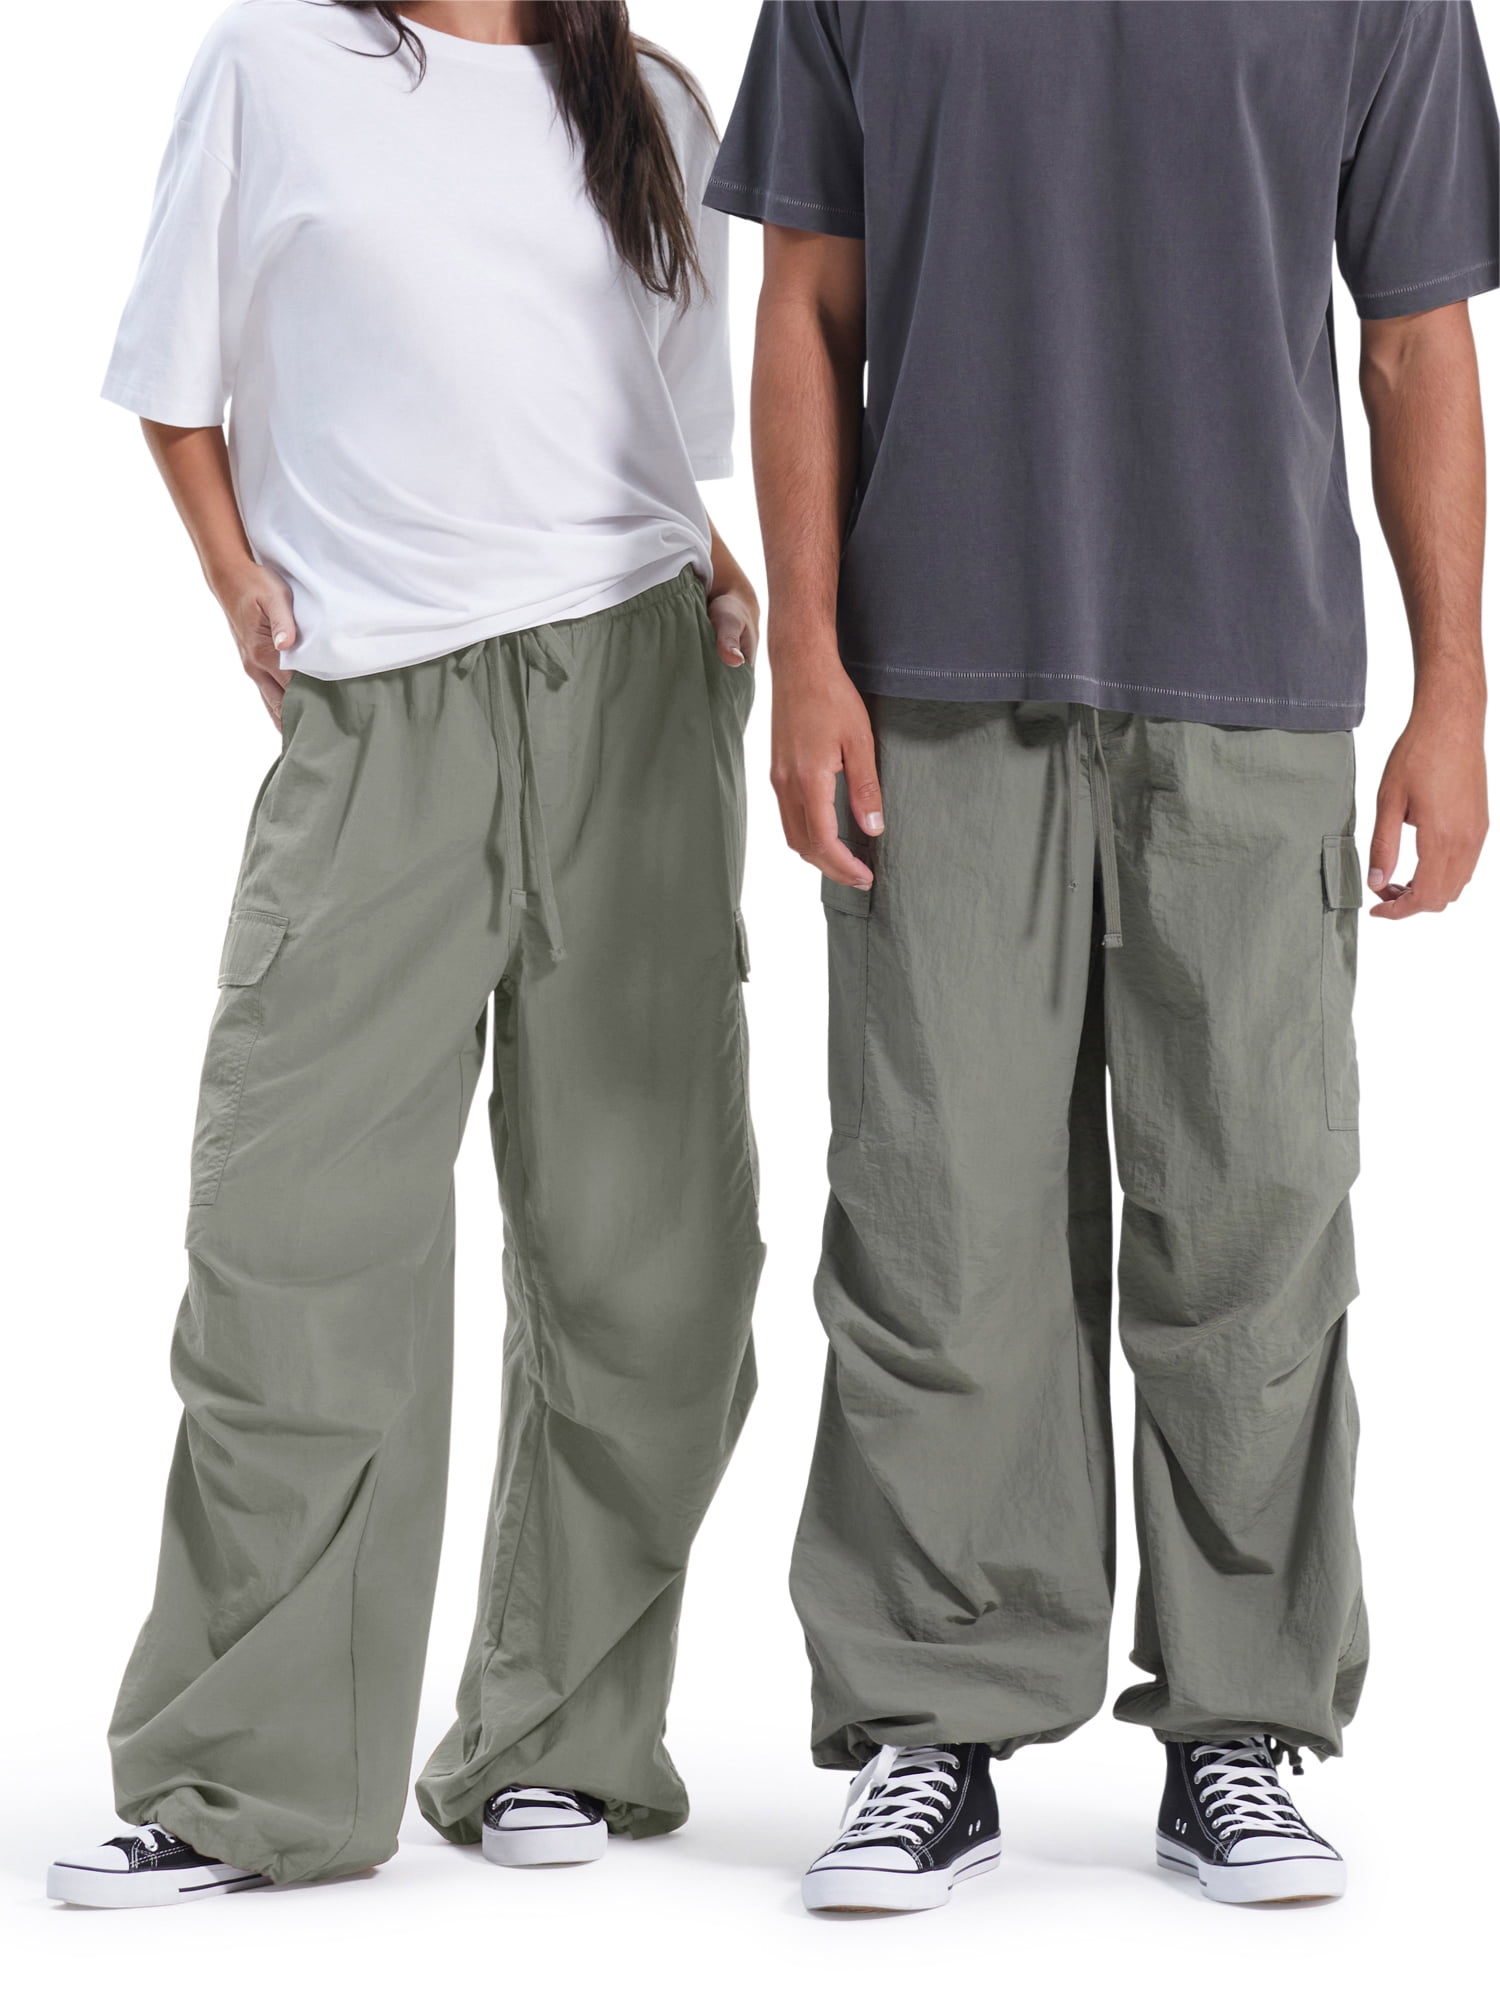 No Boundaries All Gender Parachute Pants, Men's Sizes XS - 3XL ...